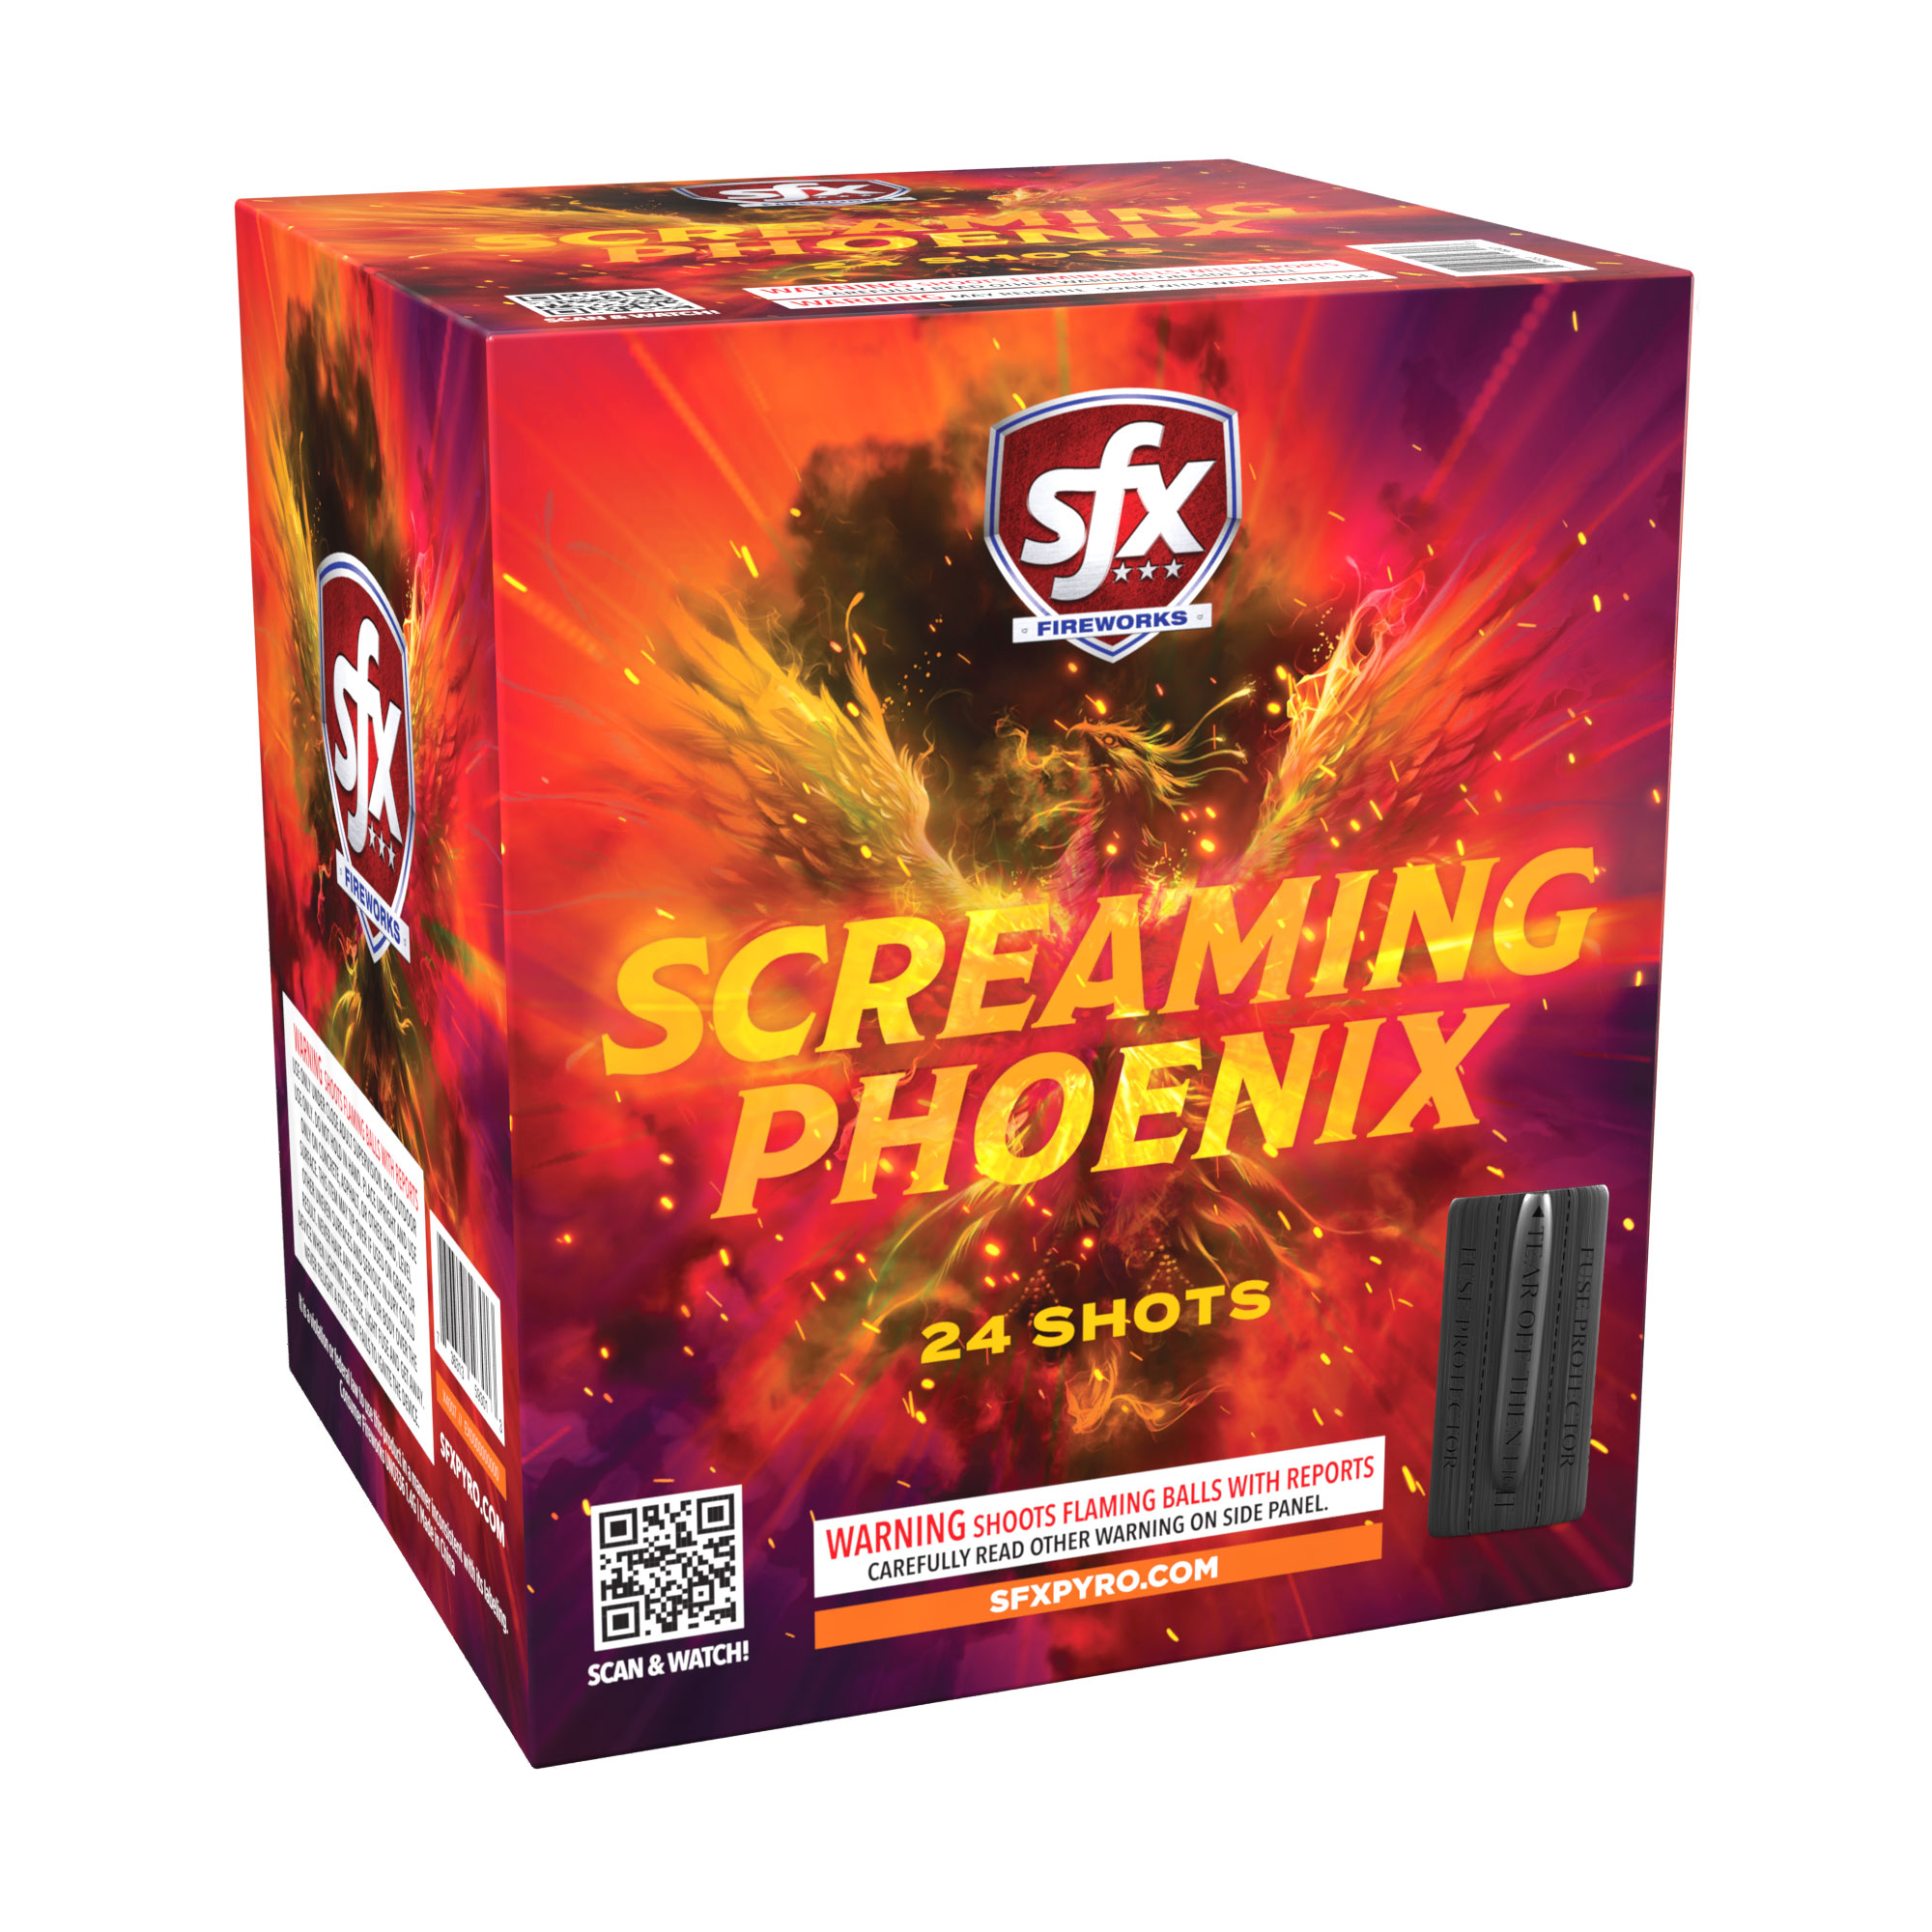 Screaming Phoenix: SFX Fireworks